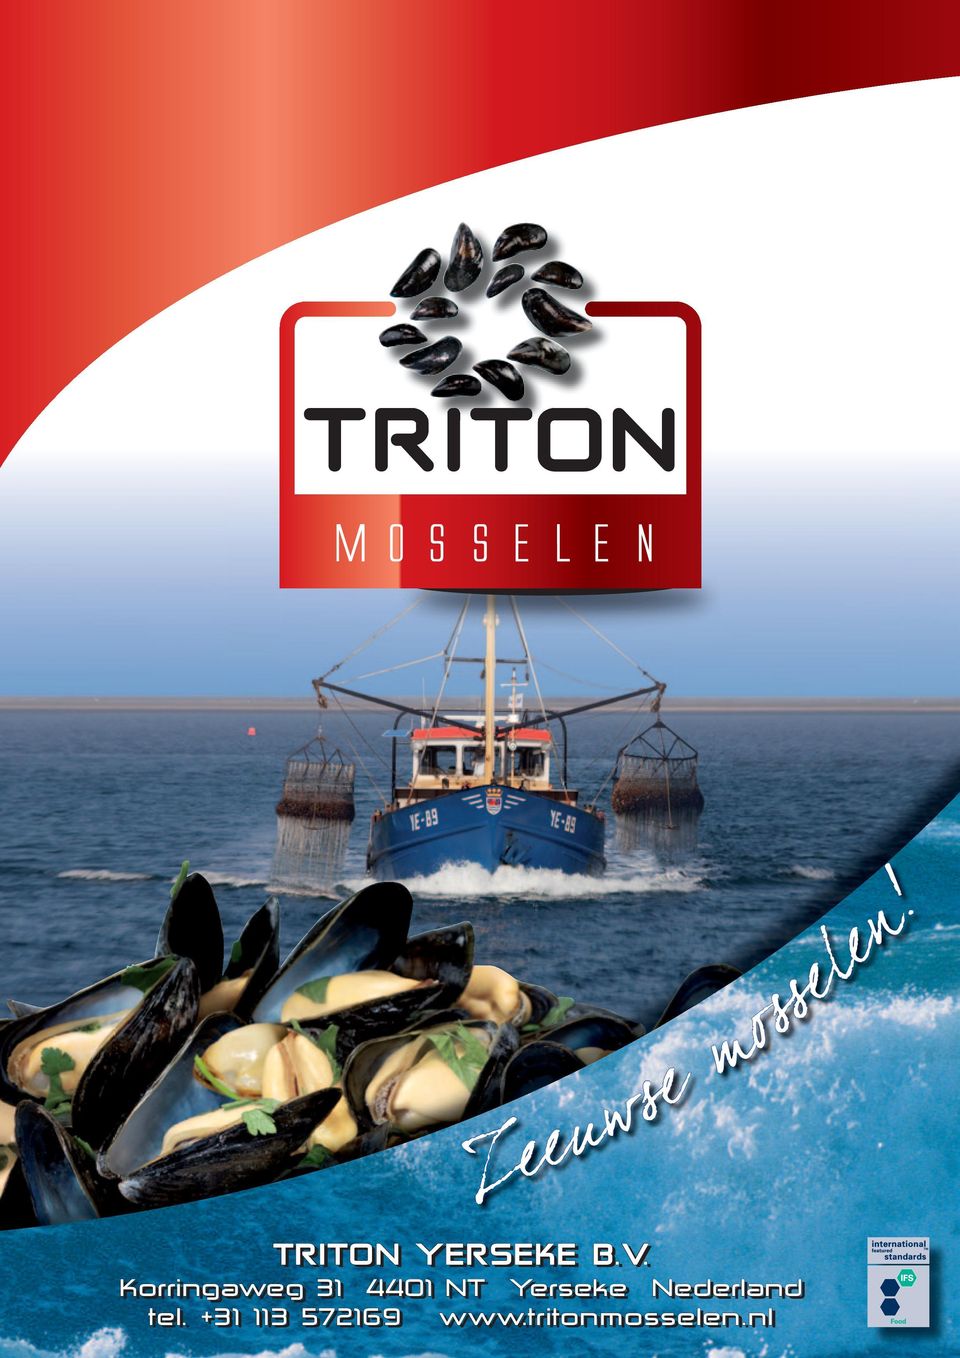 Triton Yerseke B V Korringaweg Nt Yerseke Nederland Pdf Free Download